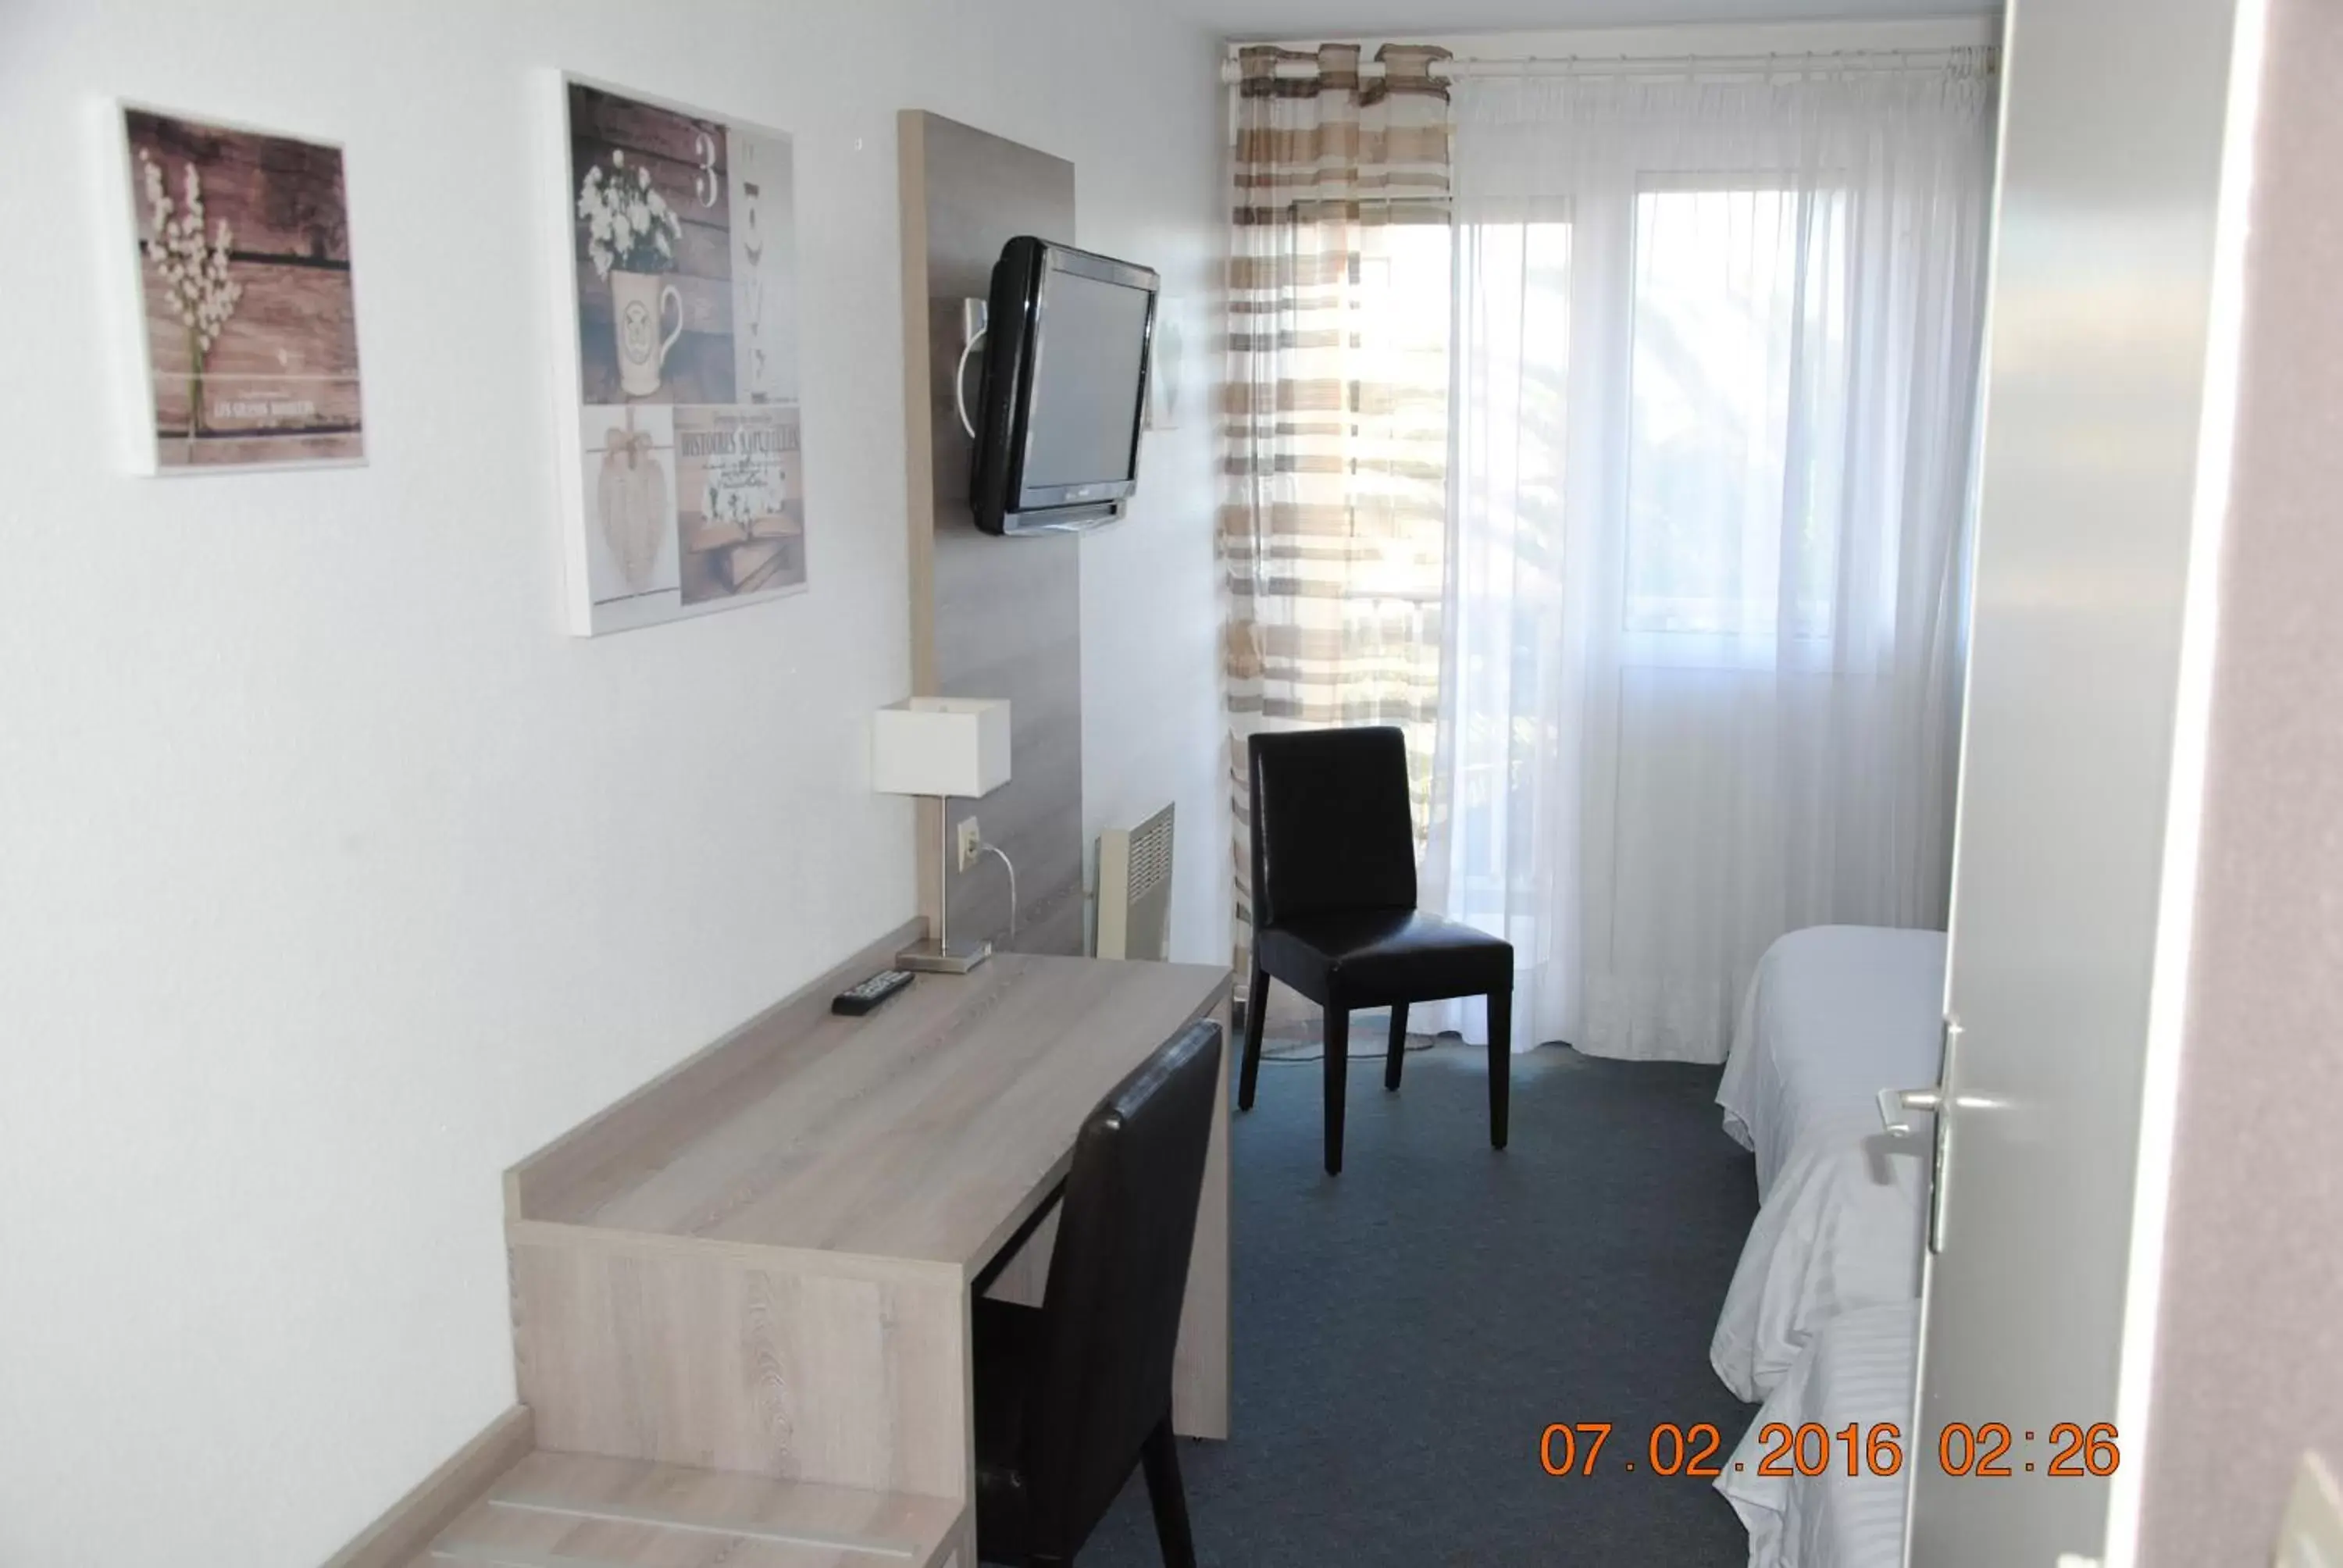 Bedroom, TV/Entertainment Center in Hotel Albizzia